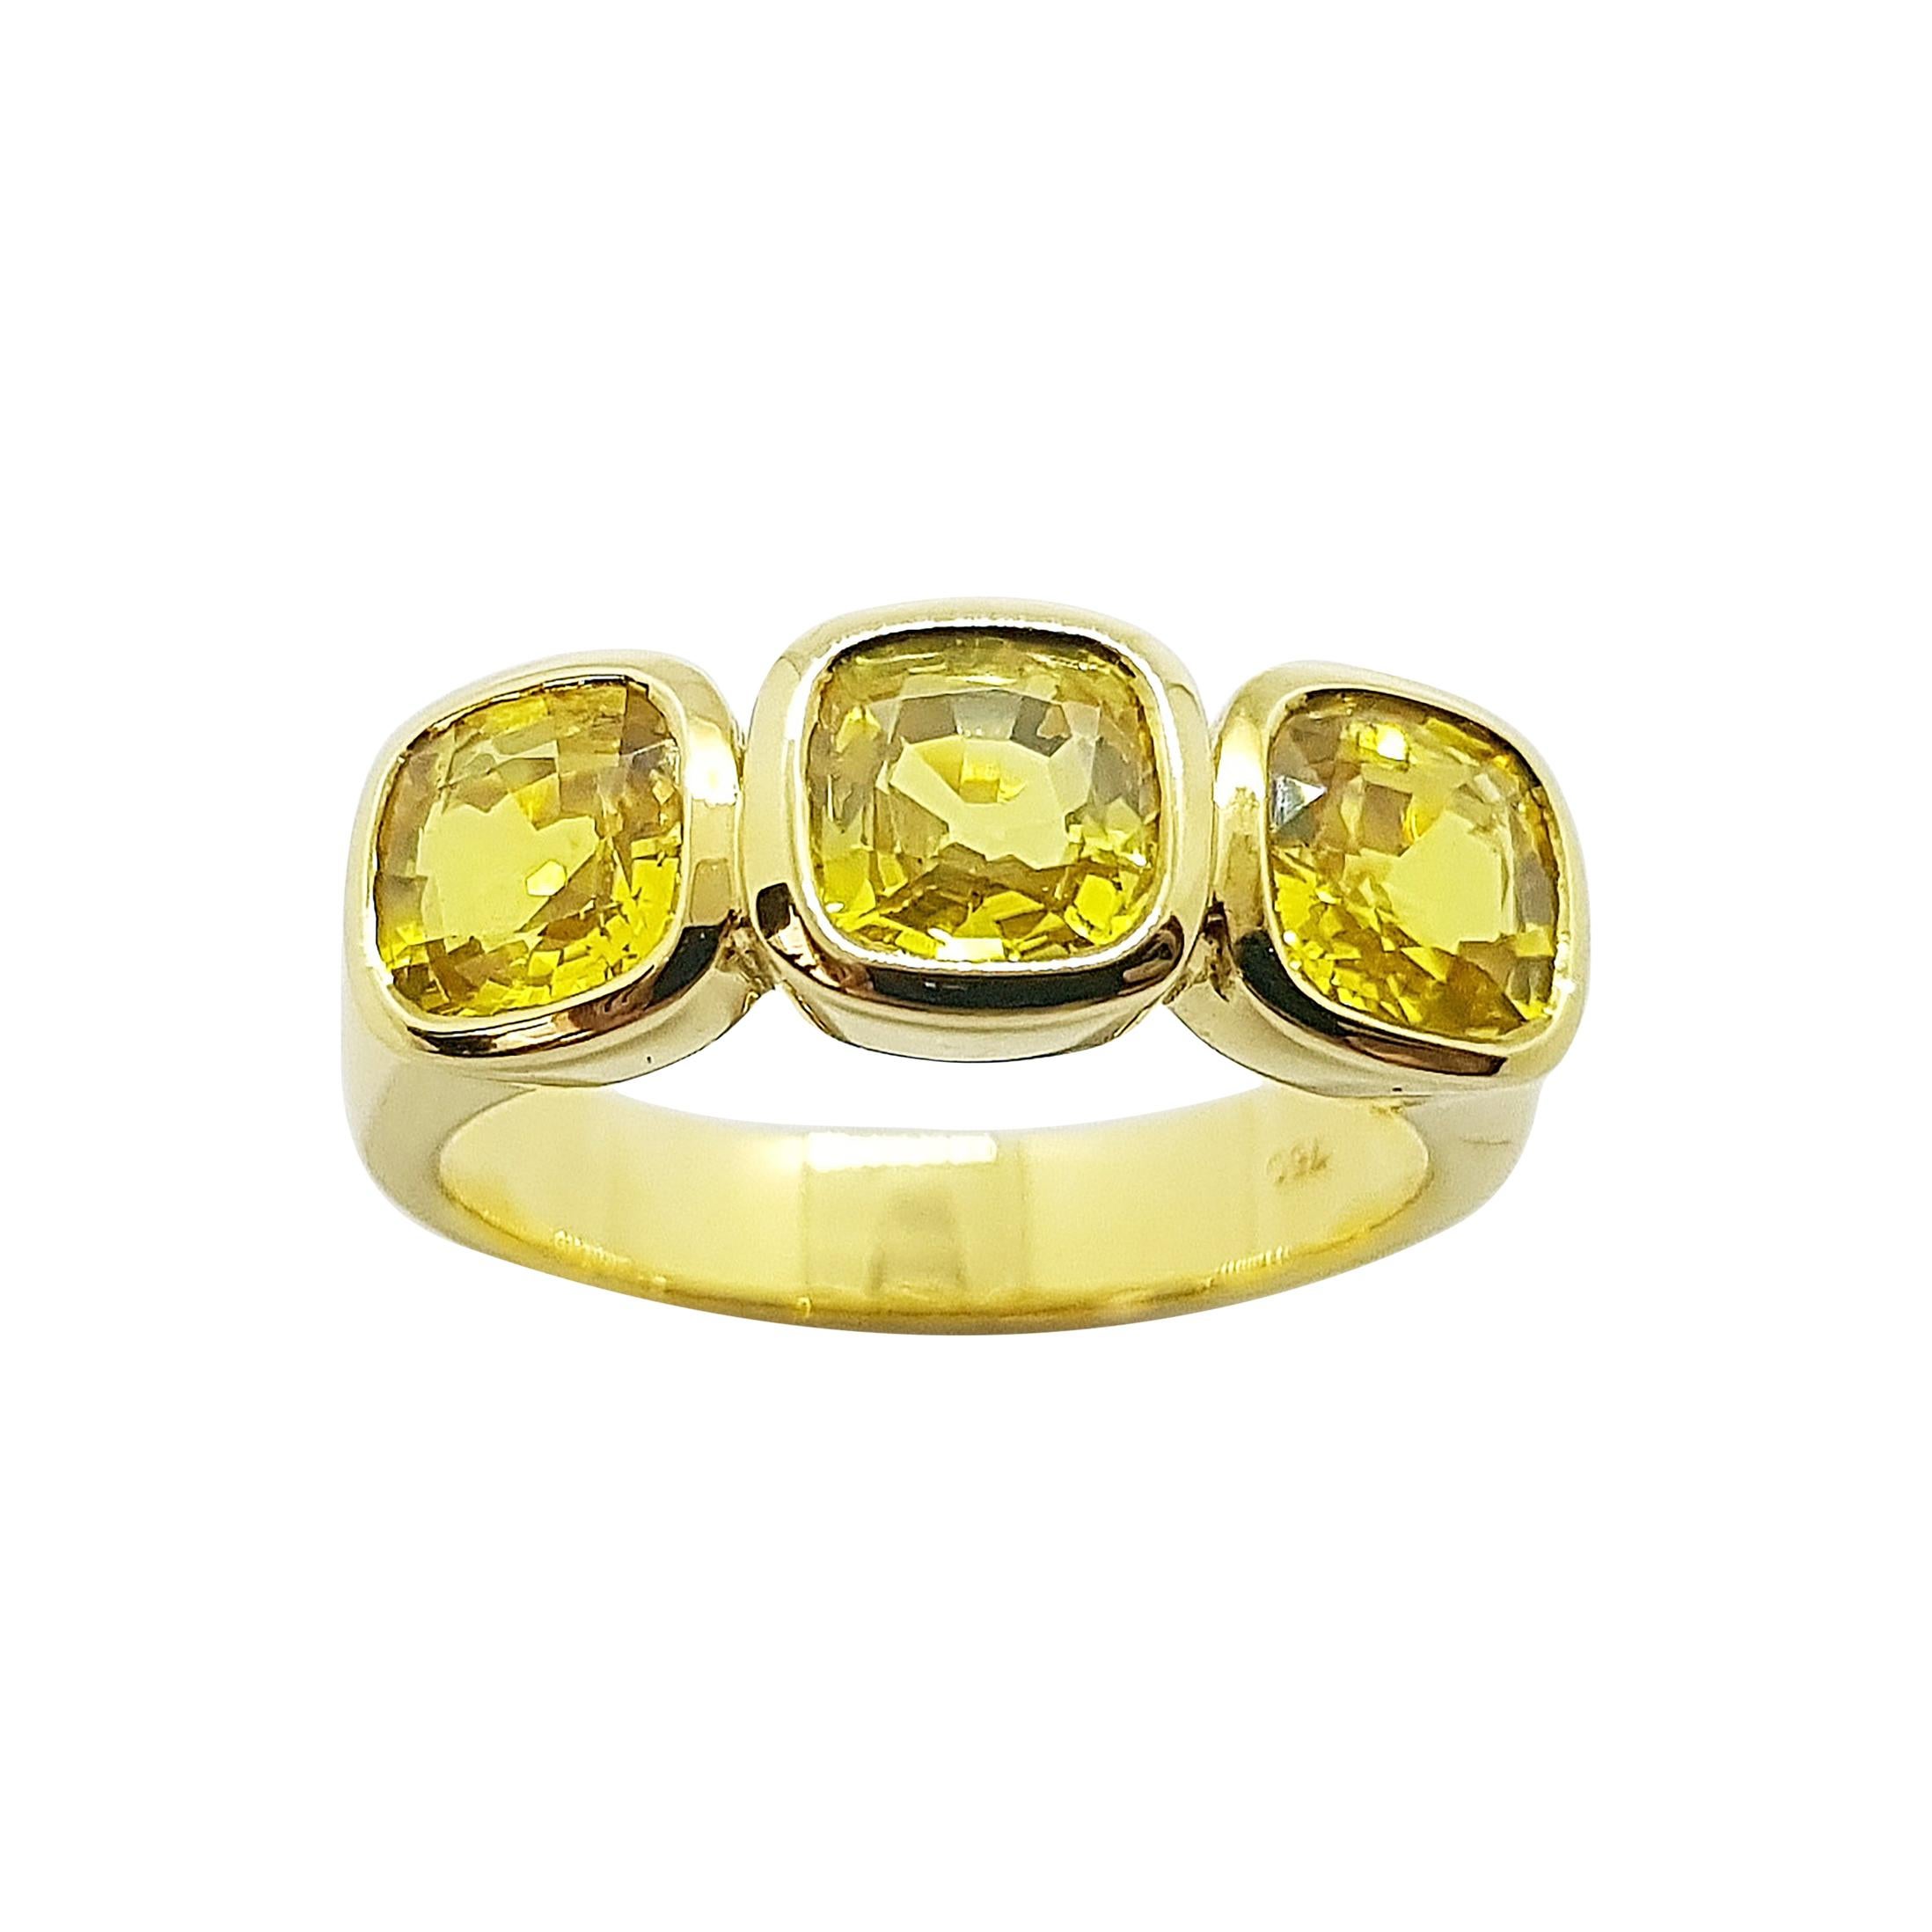 Cushion Shape Yellow Sapphire Ring Set in 18 Karat Gold Settings